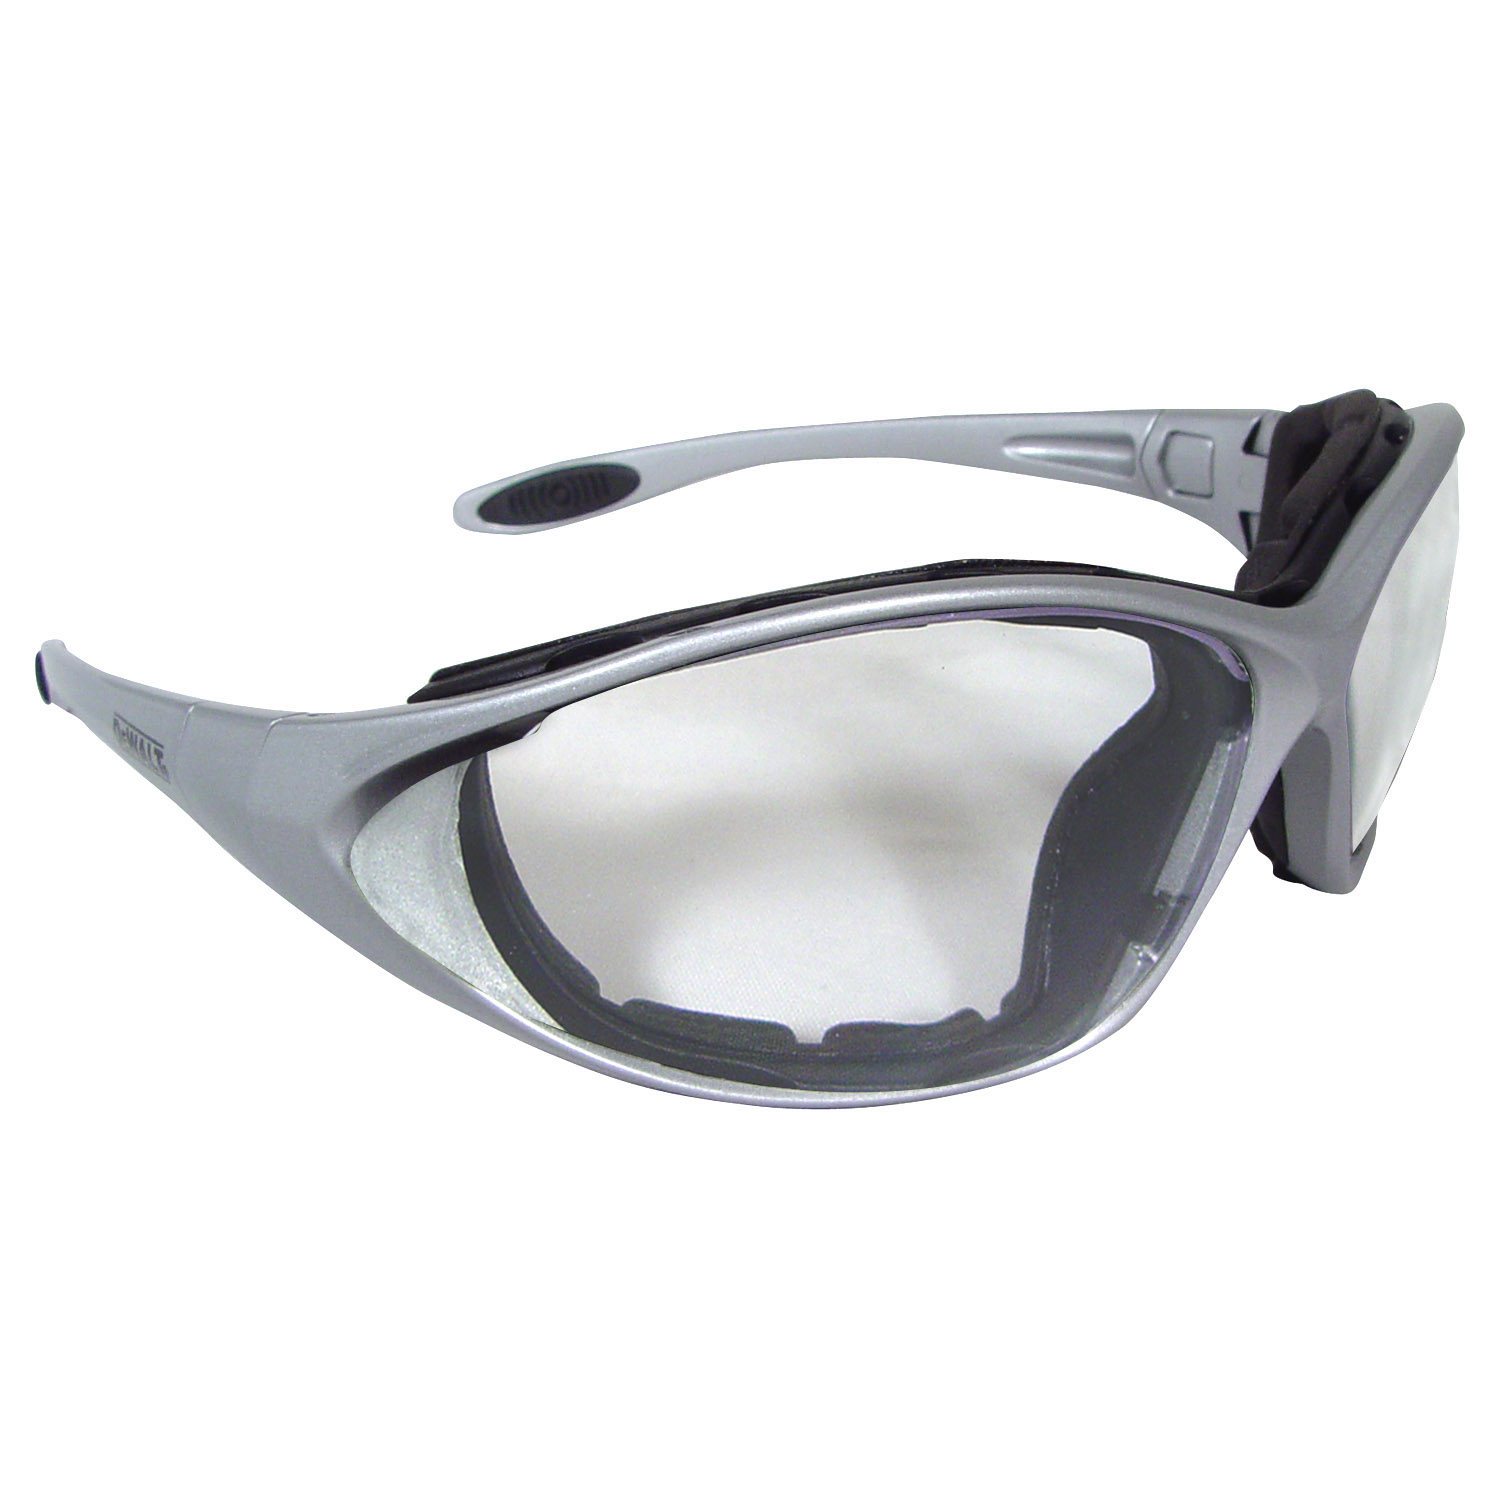 DeWalt® Framework™ Safety Glasses with Clear Foamed Lined Lens - Safety Eyewear